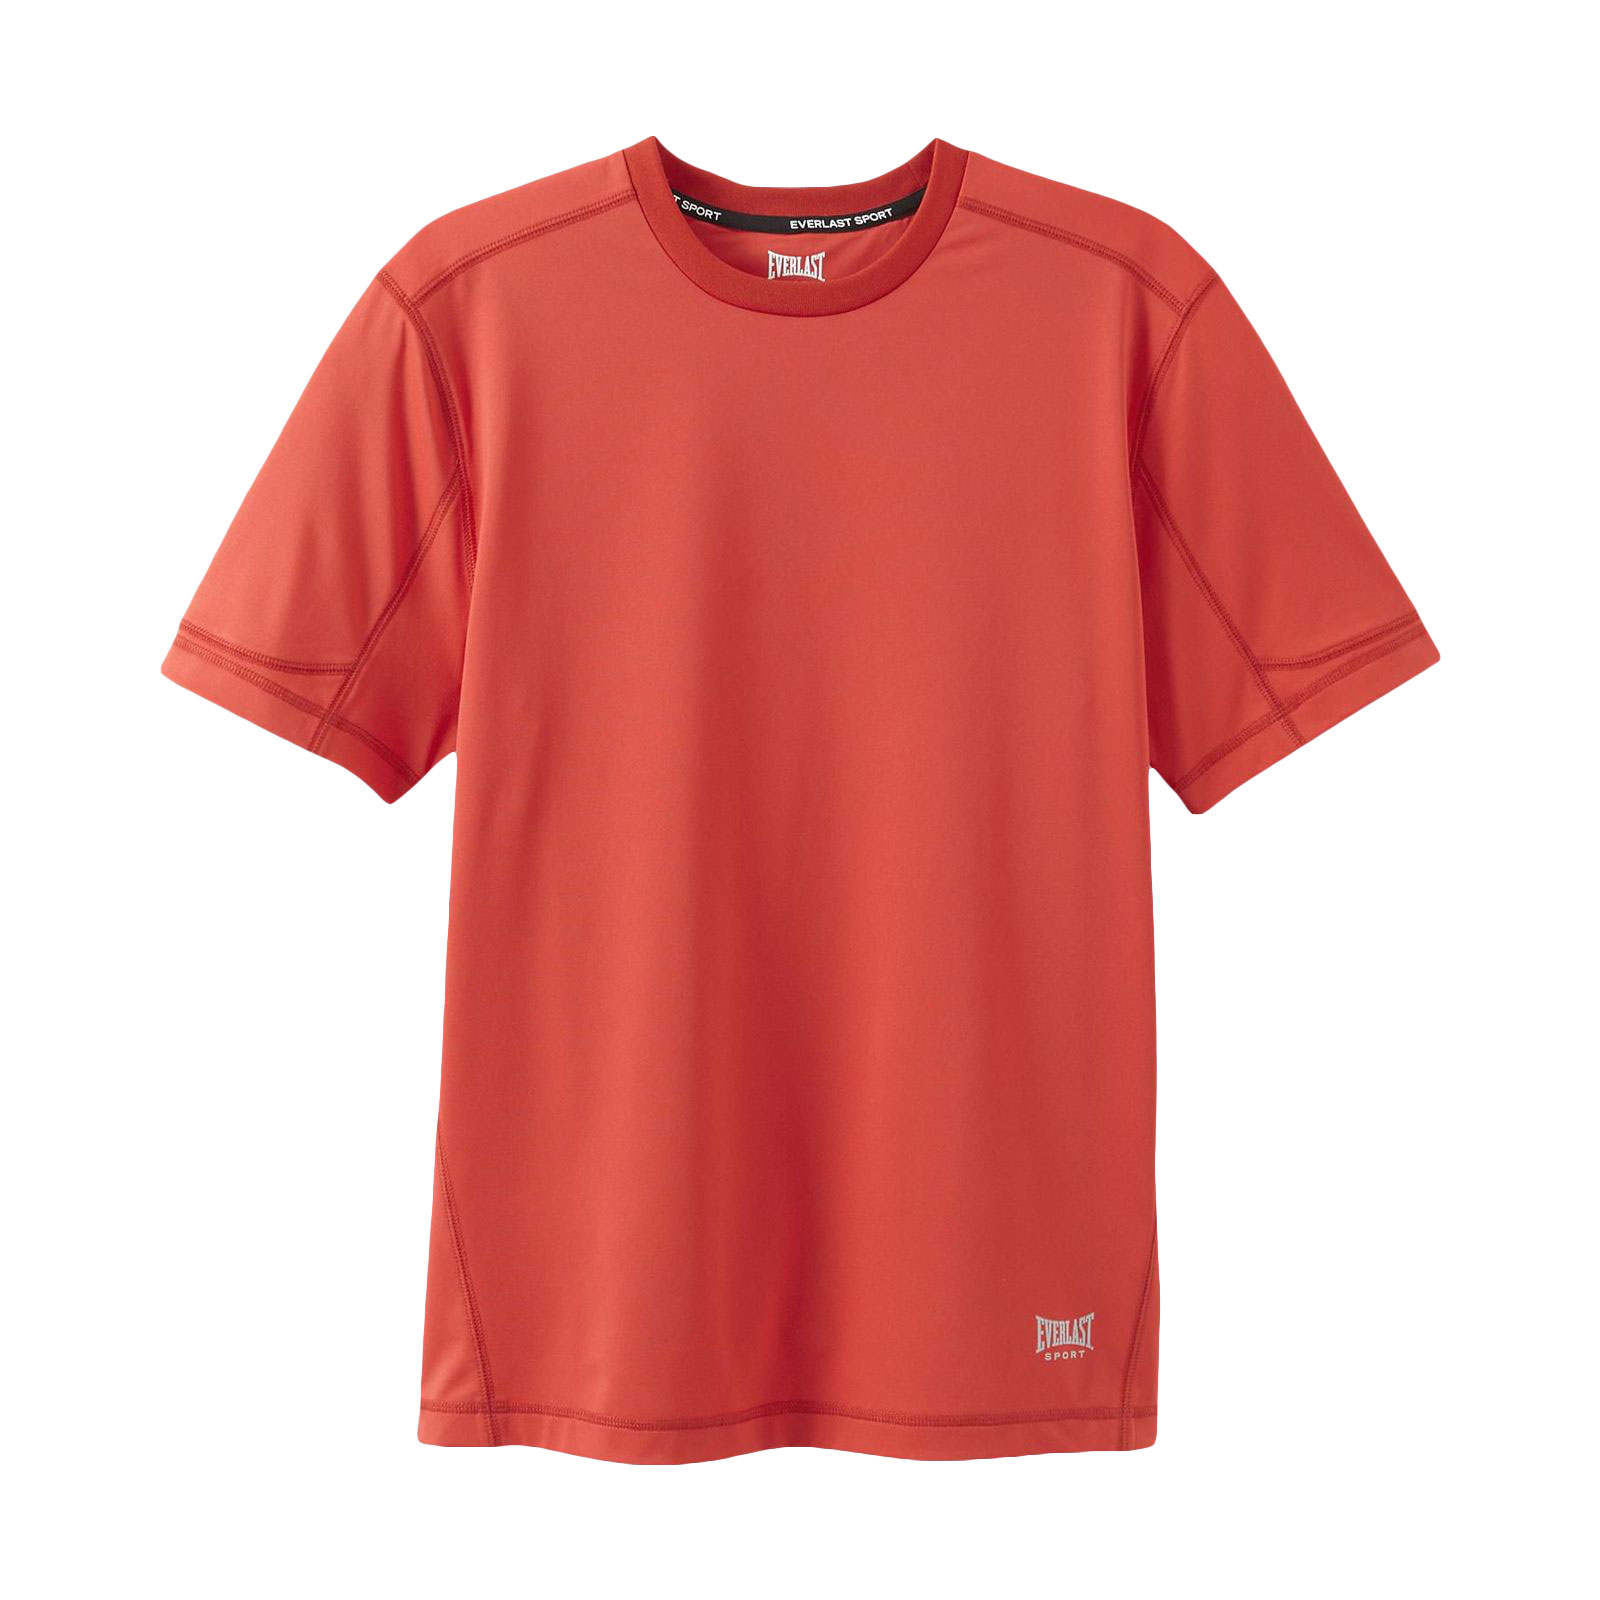 Everlast® Sport Mens Workout Shirt   Clothing   Mens   Activewear